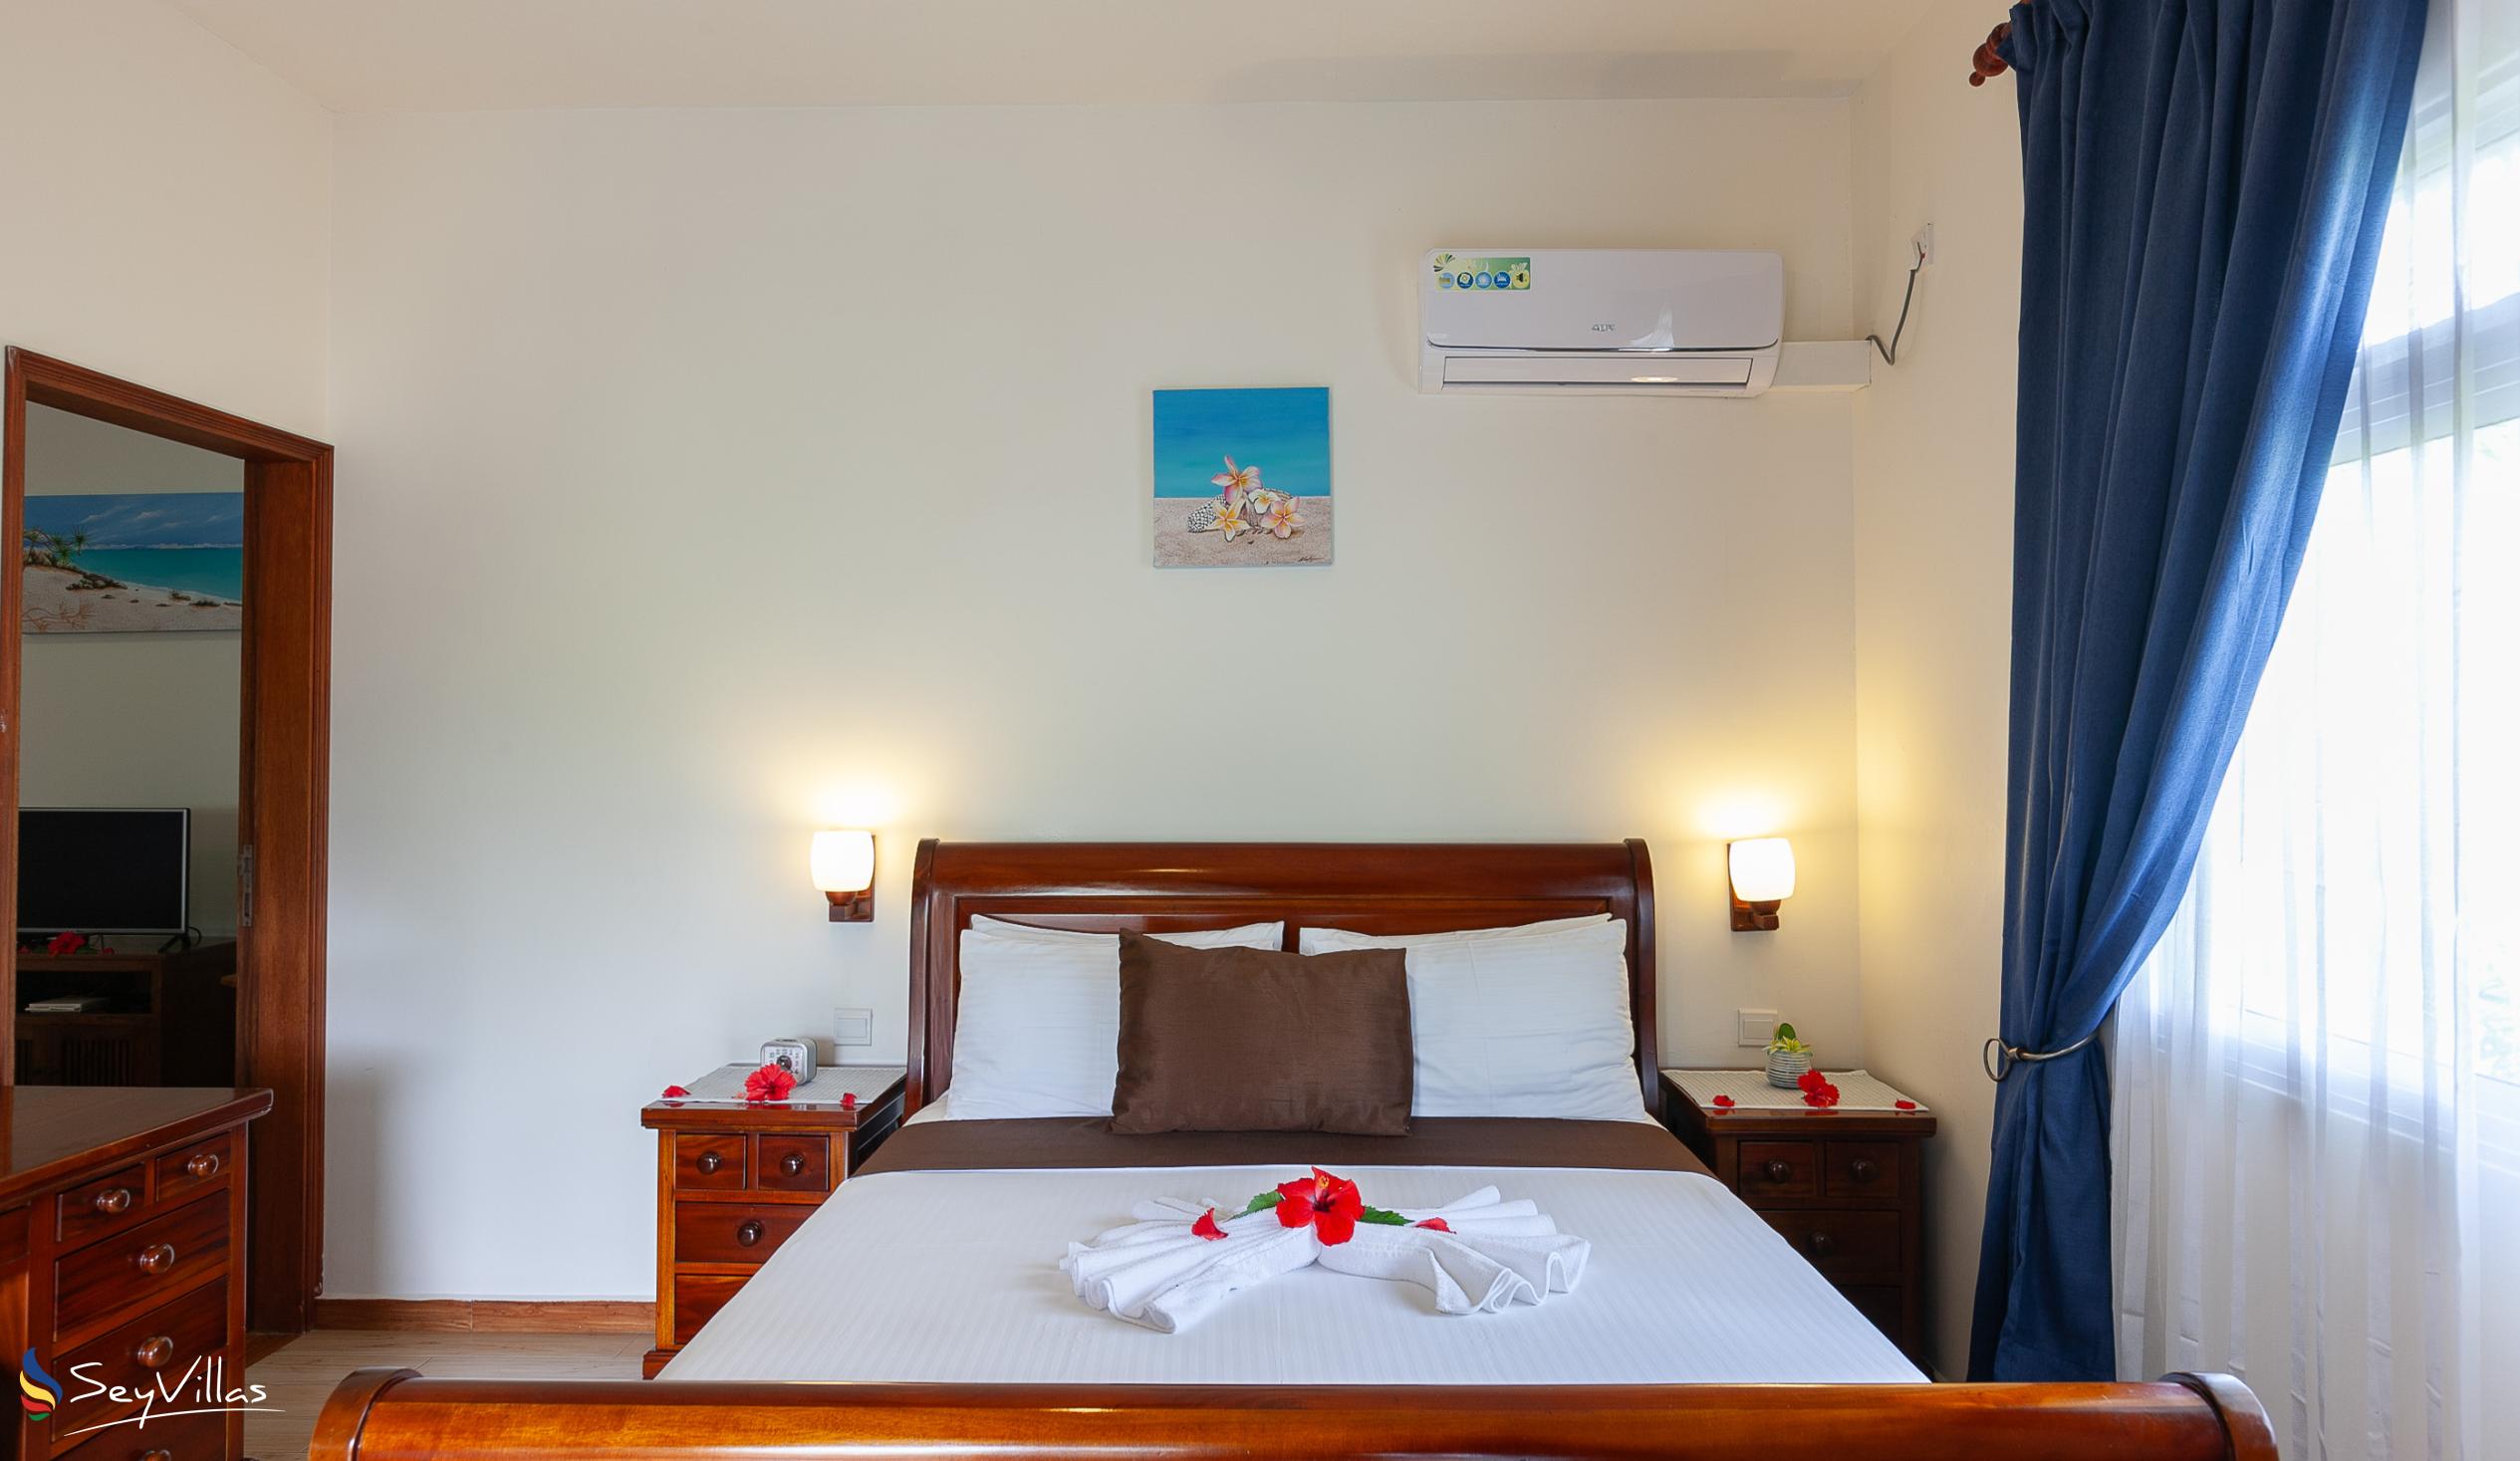 Photo 66: Seashell Beach Villa - 2-Bedroom Apartment - Praslin (Seychelles)